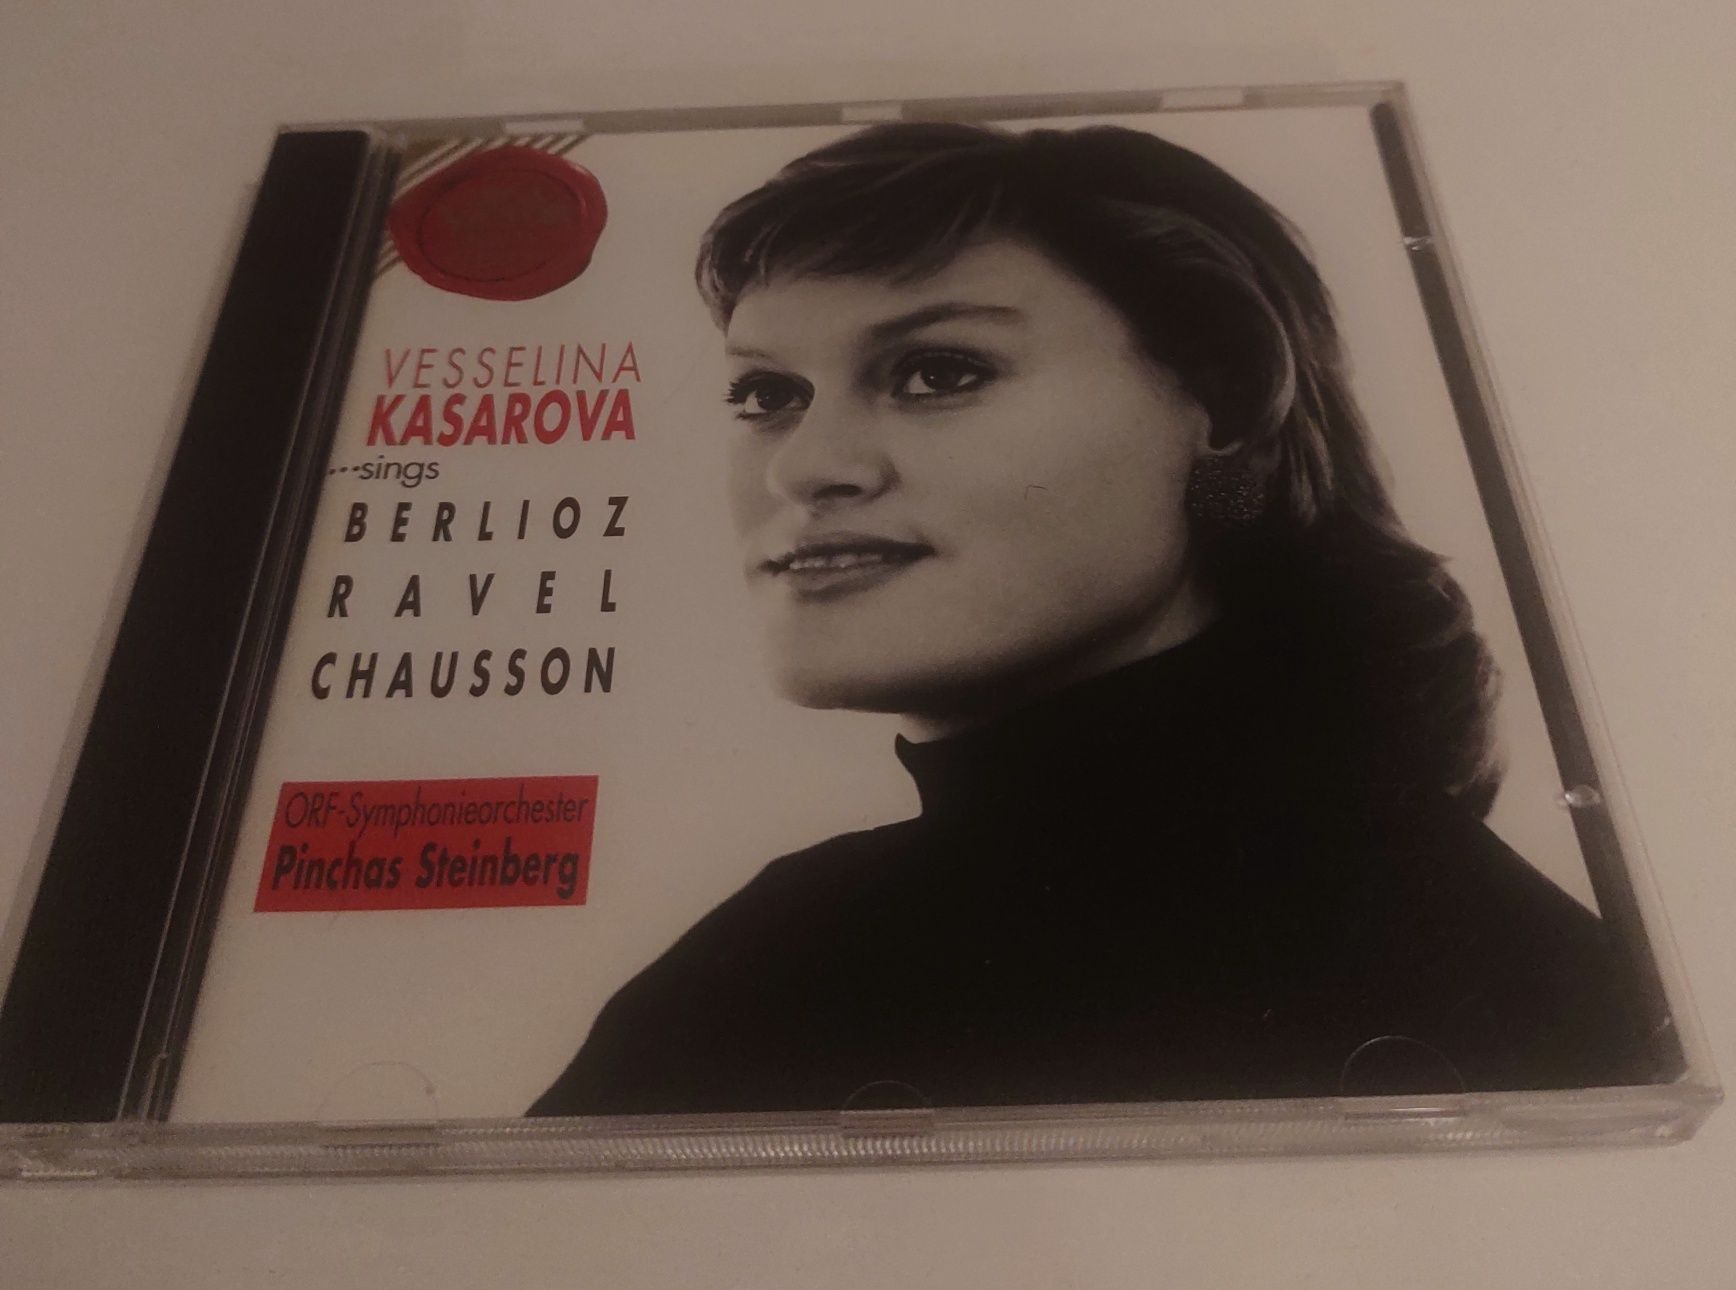 Sprzedam CD Vesselina Kasarova Berlioz Ravel Chausson